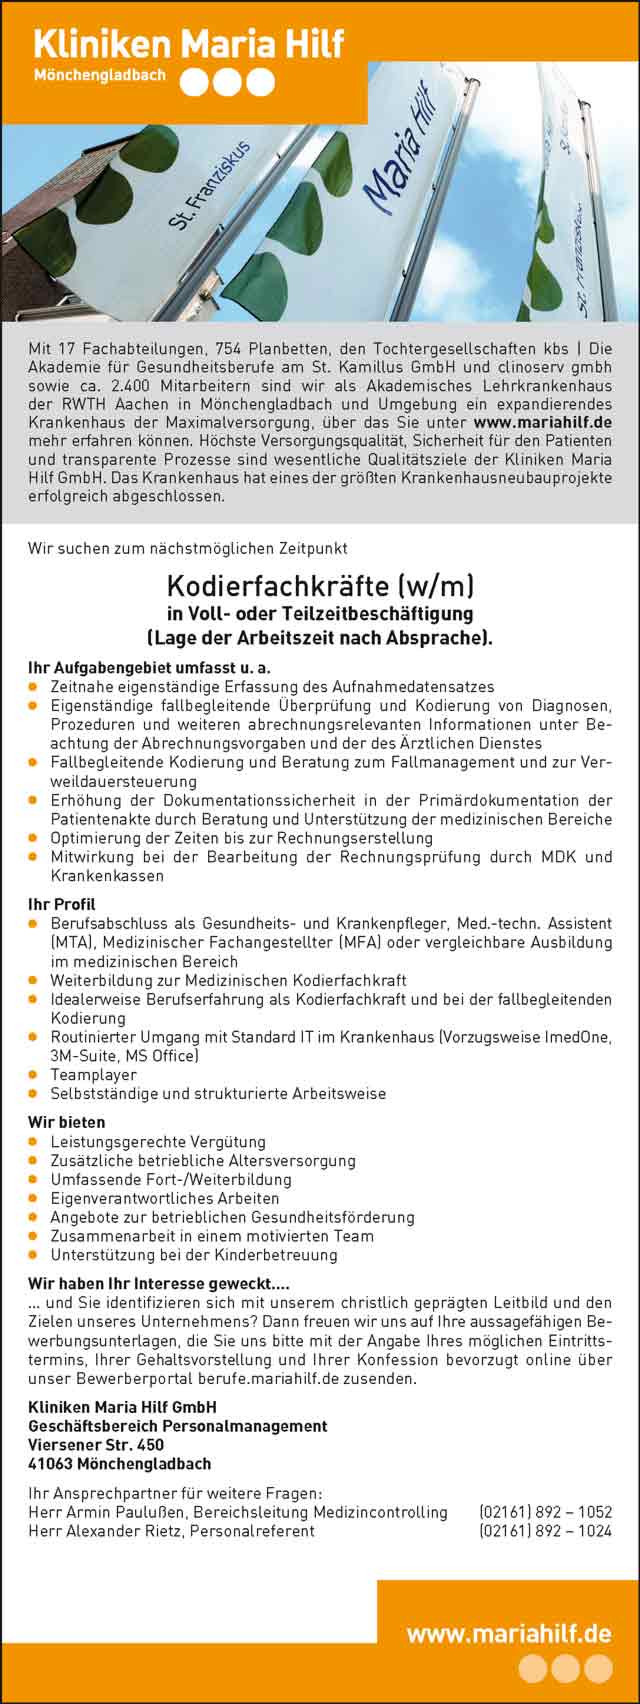 Kliniken Maria Hilf GmbH Mönchengladbach: Kodierfachkräfte (w/m)